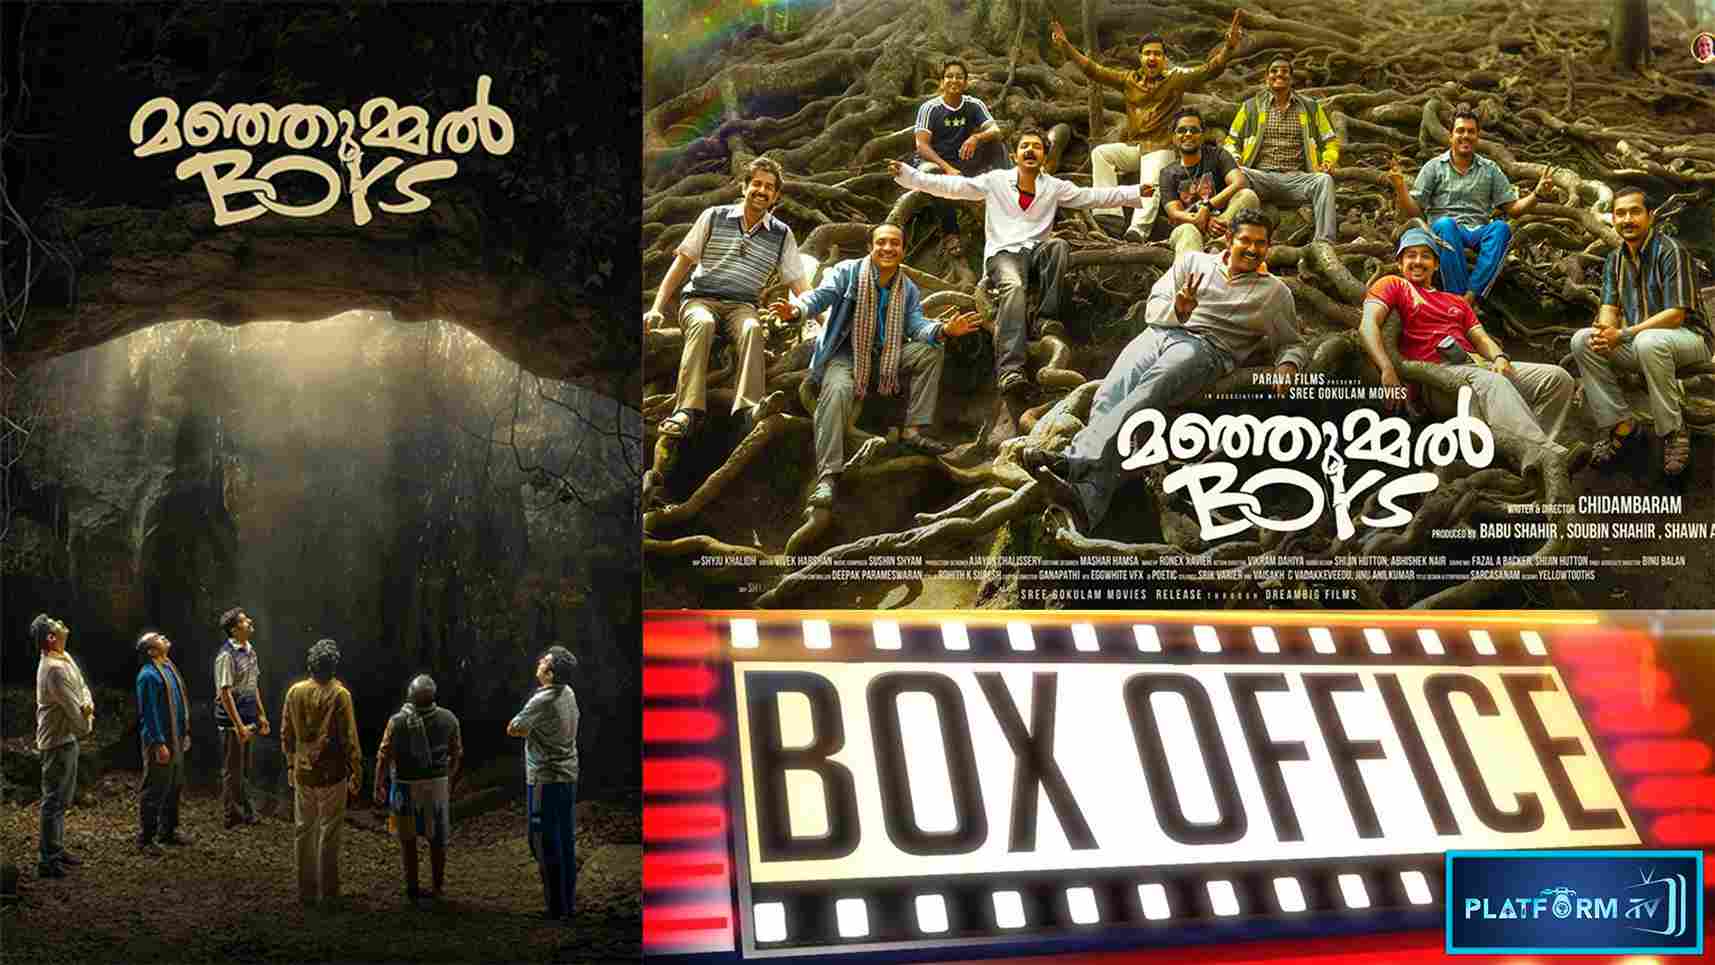 Manjummel Boys Box Office Collection - Platform Tamil